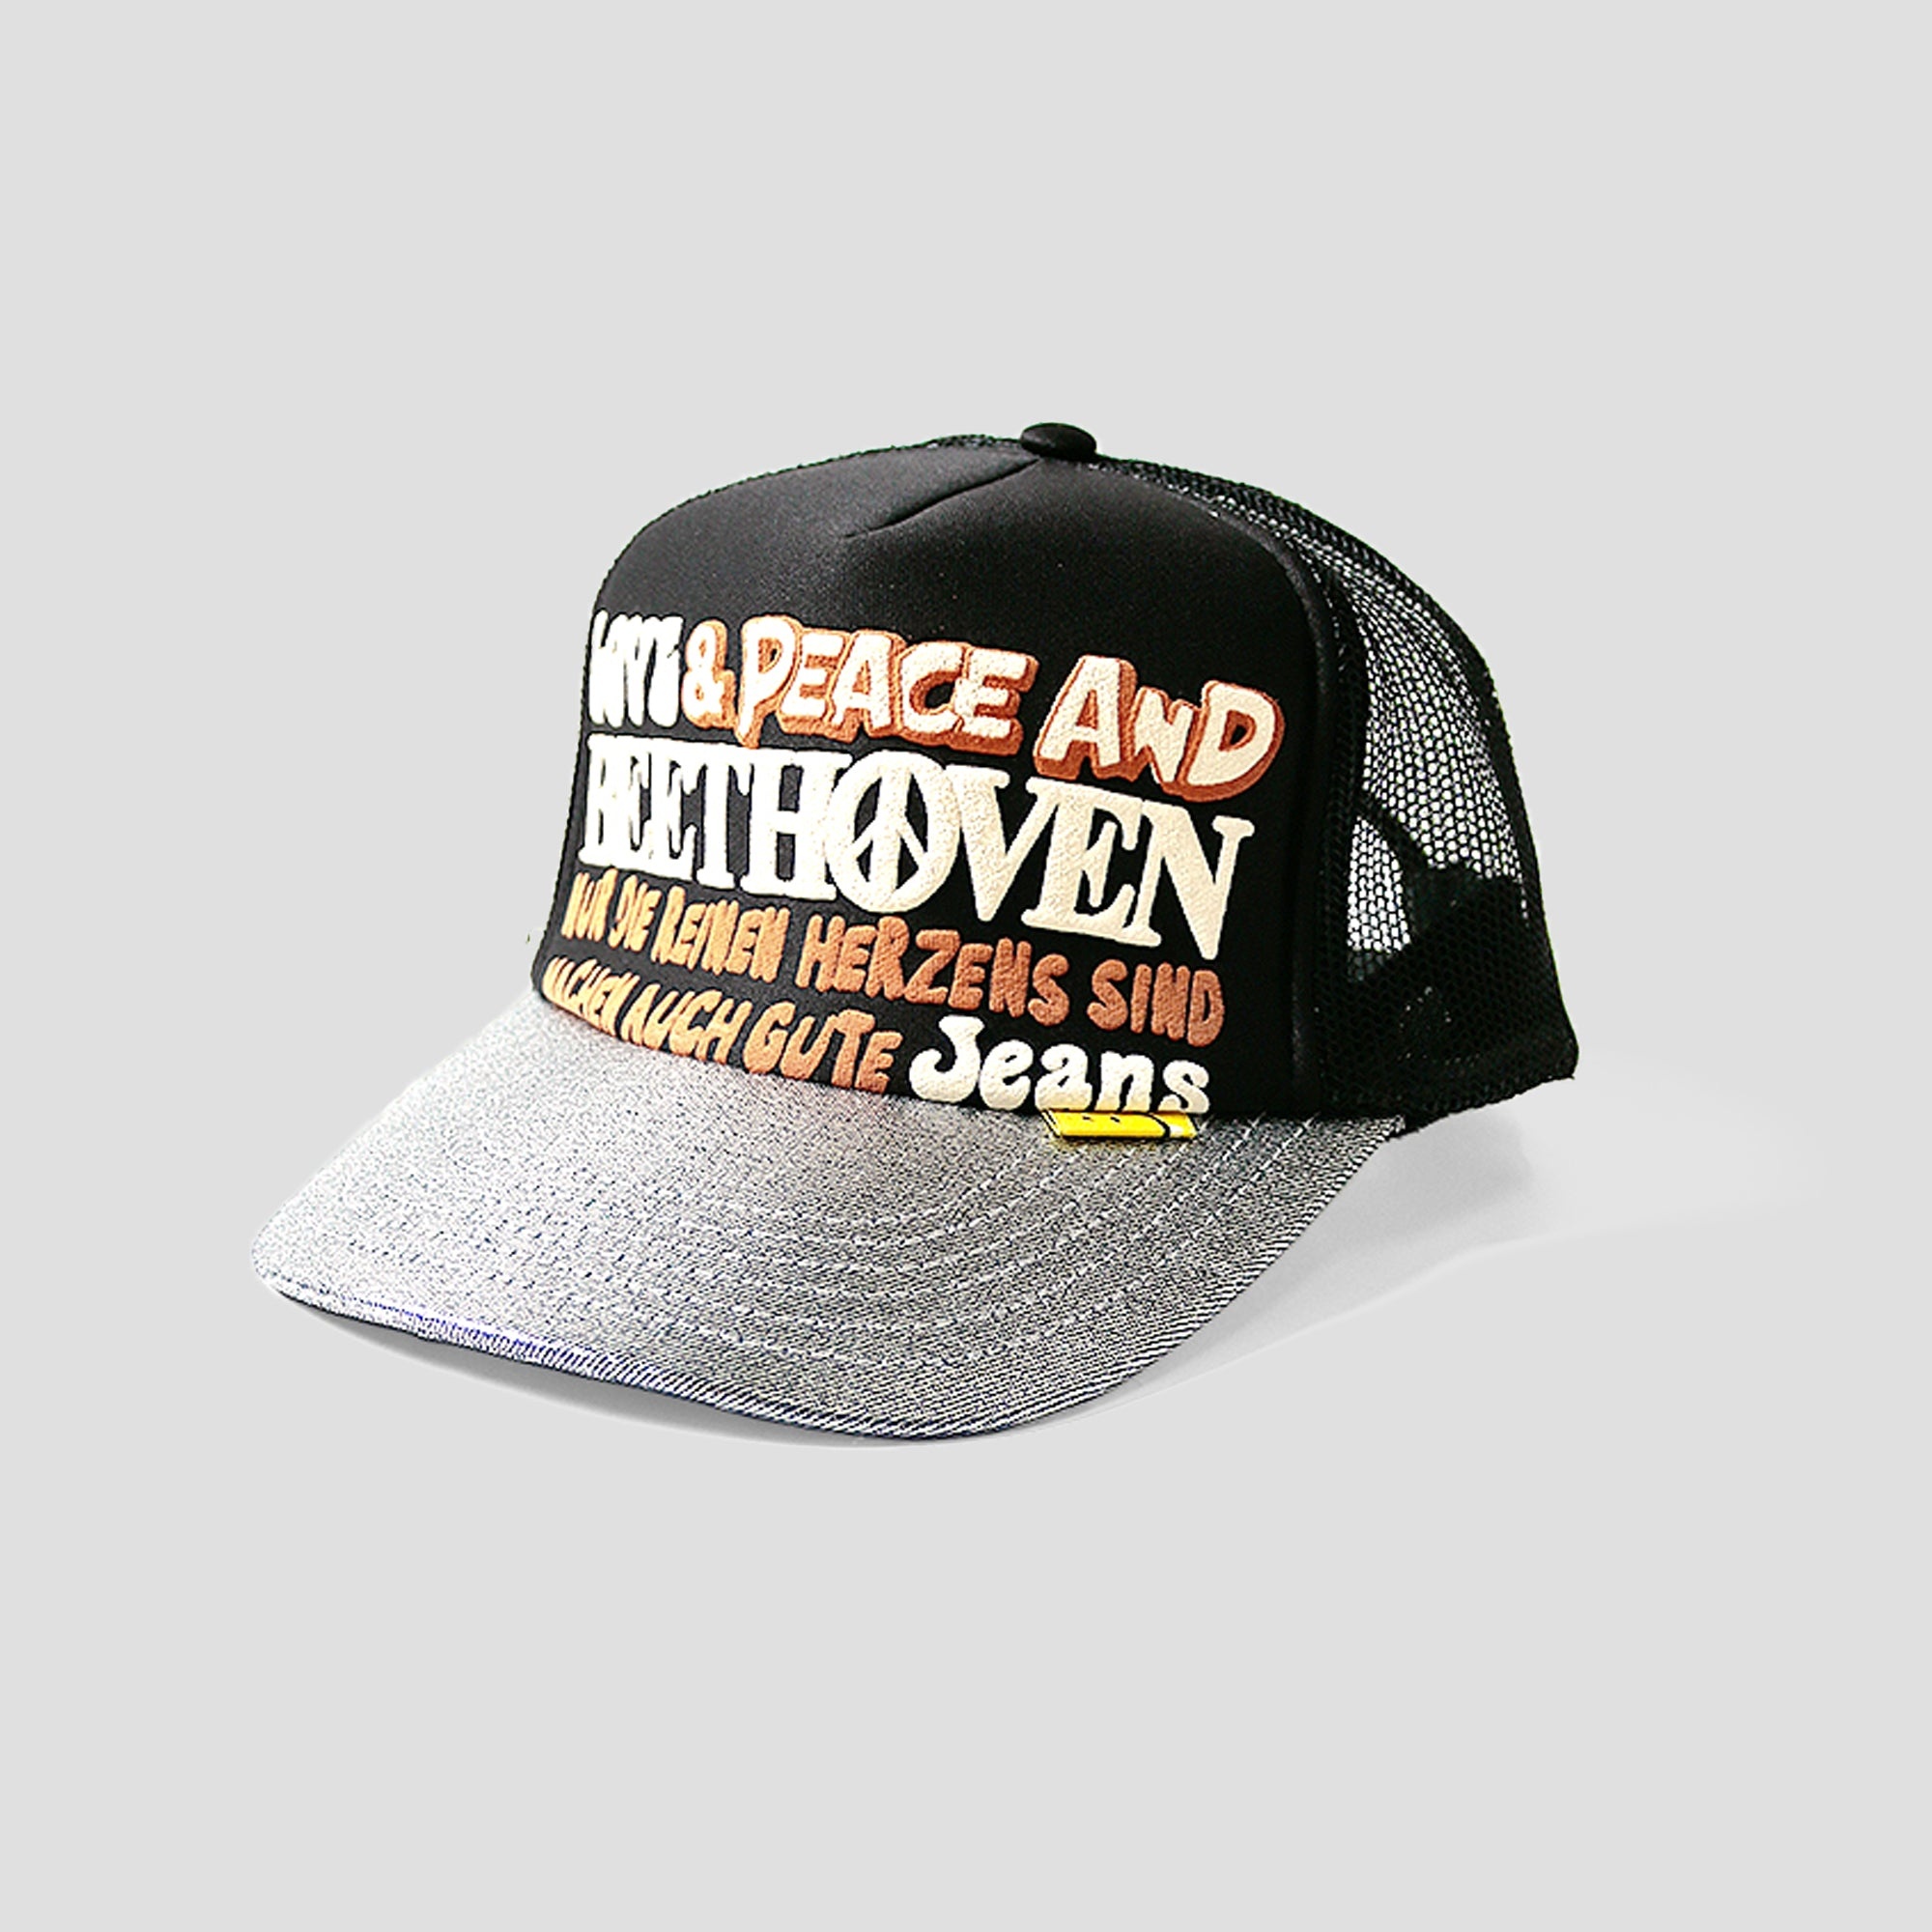 LOVE & PEACE BEETHOVEN SILVER BRIM TRUCKER HAT - 1